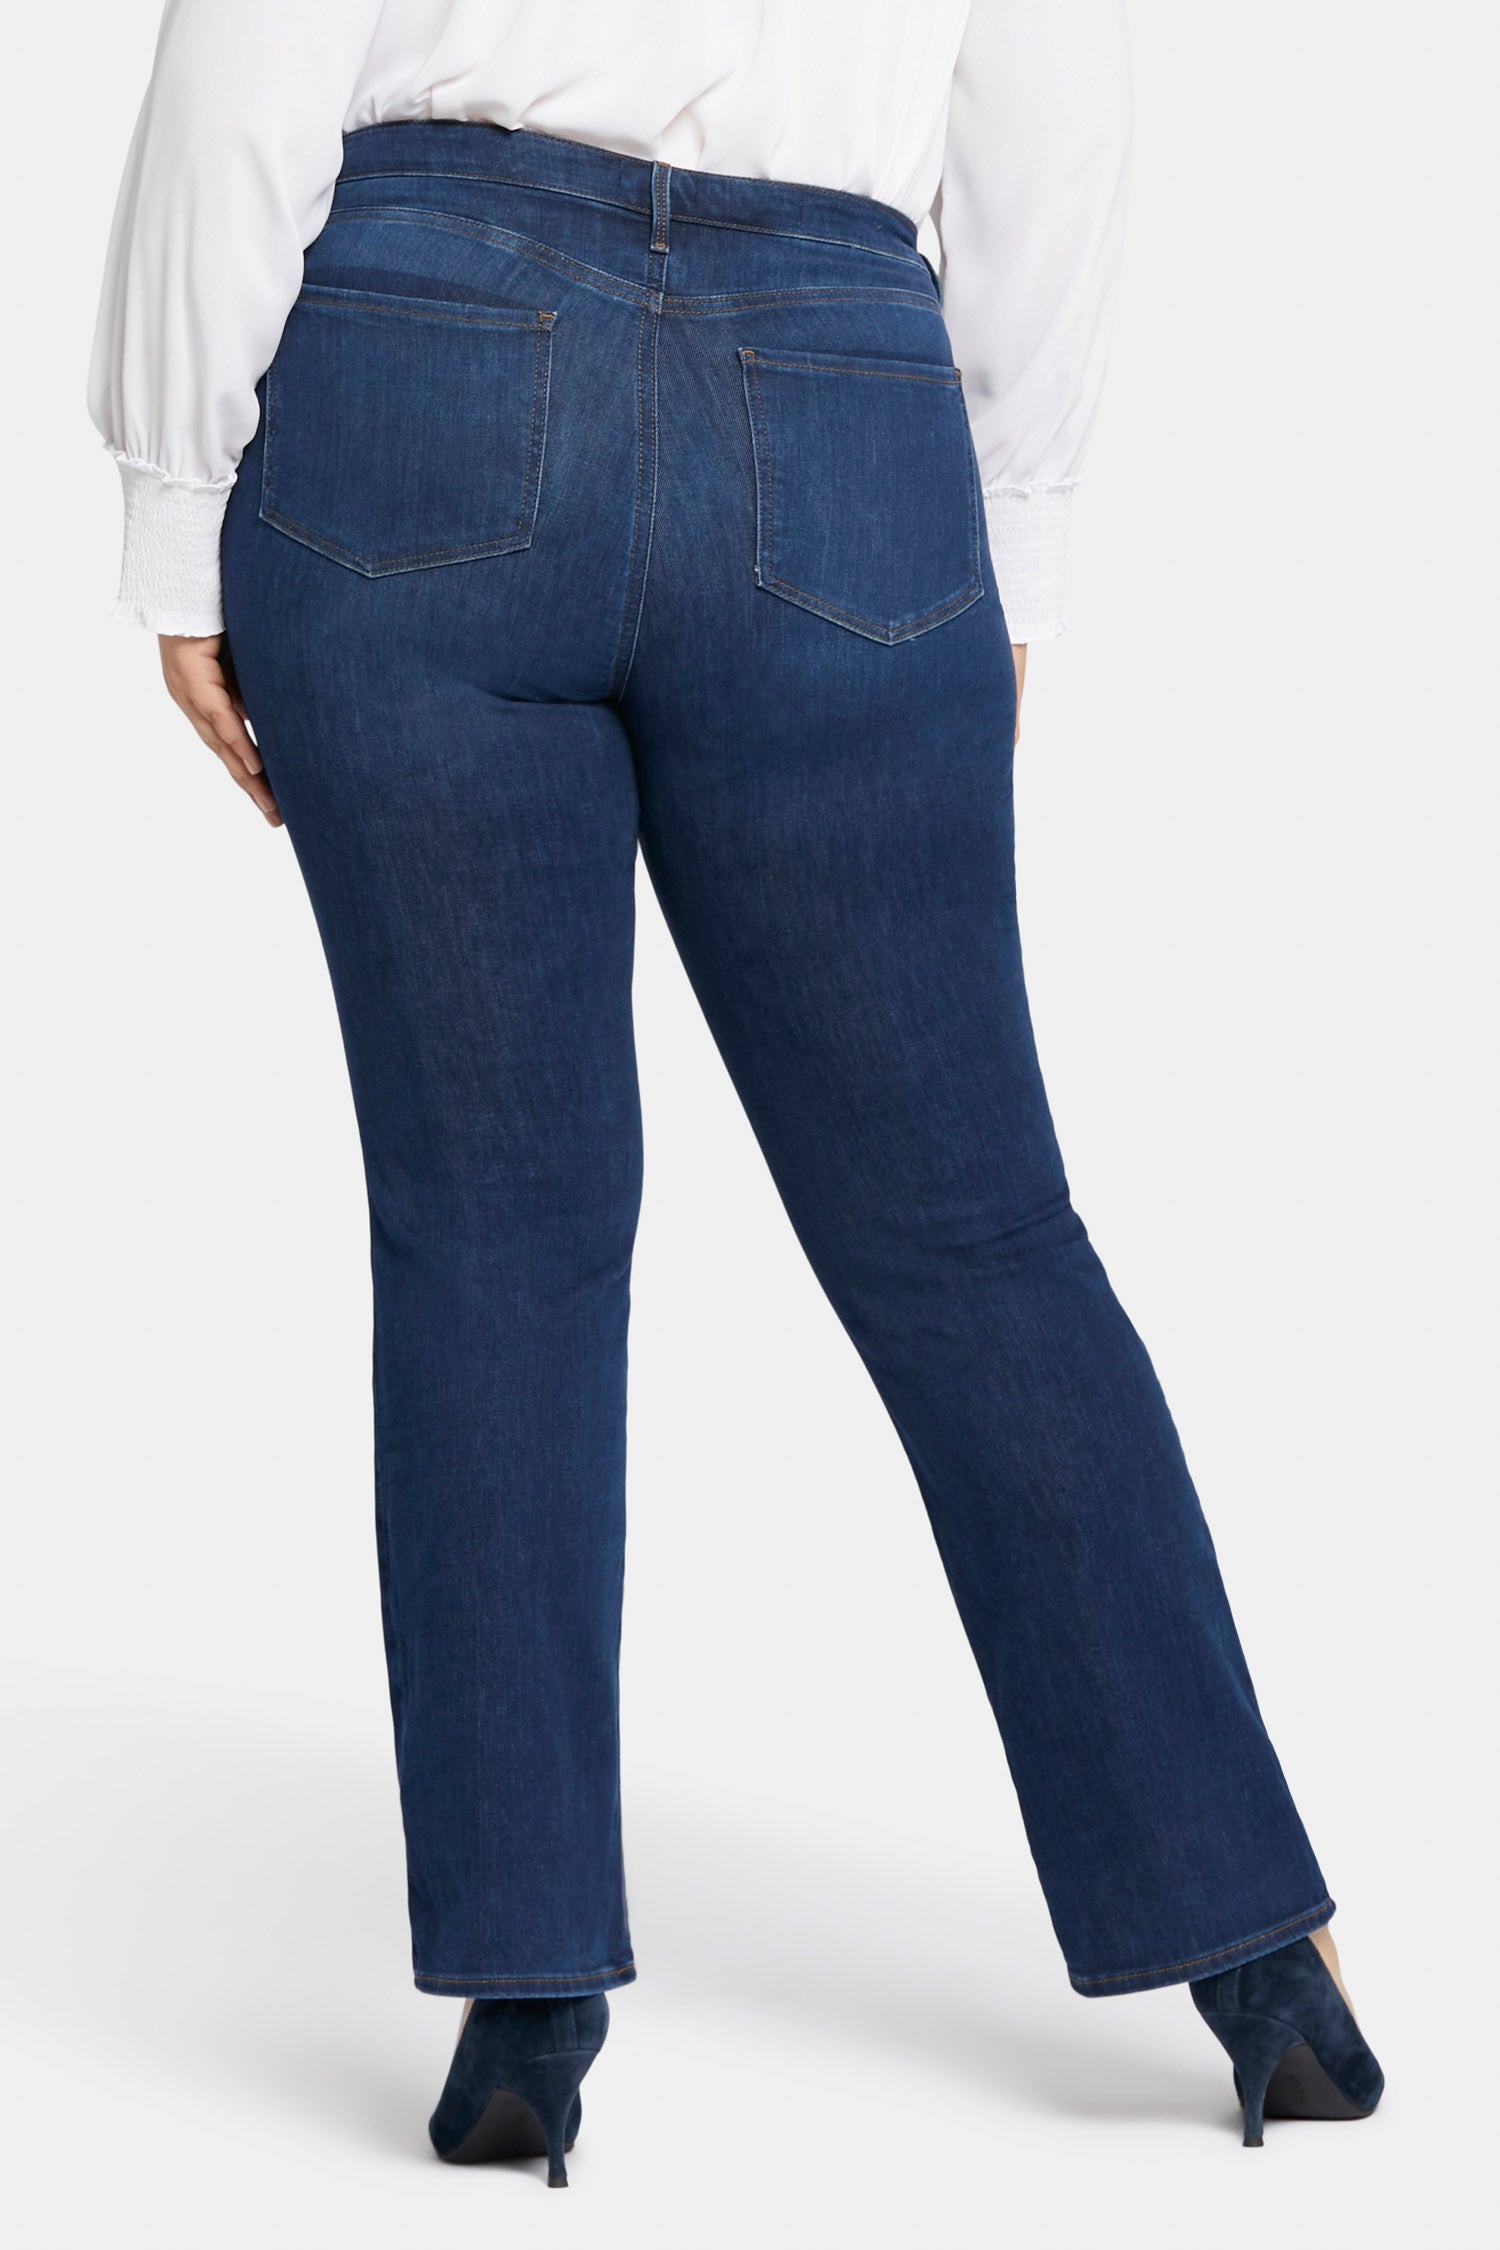 NYDJ Tummy Tuck Blue Jeans Style 4000 Stone Wash Bootcut High Rise Women's  Sz 16